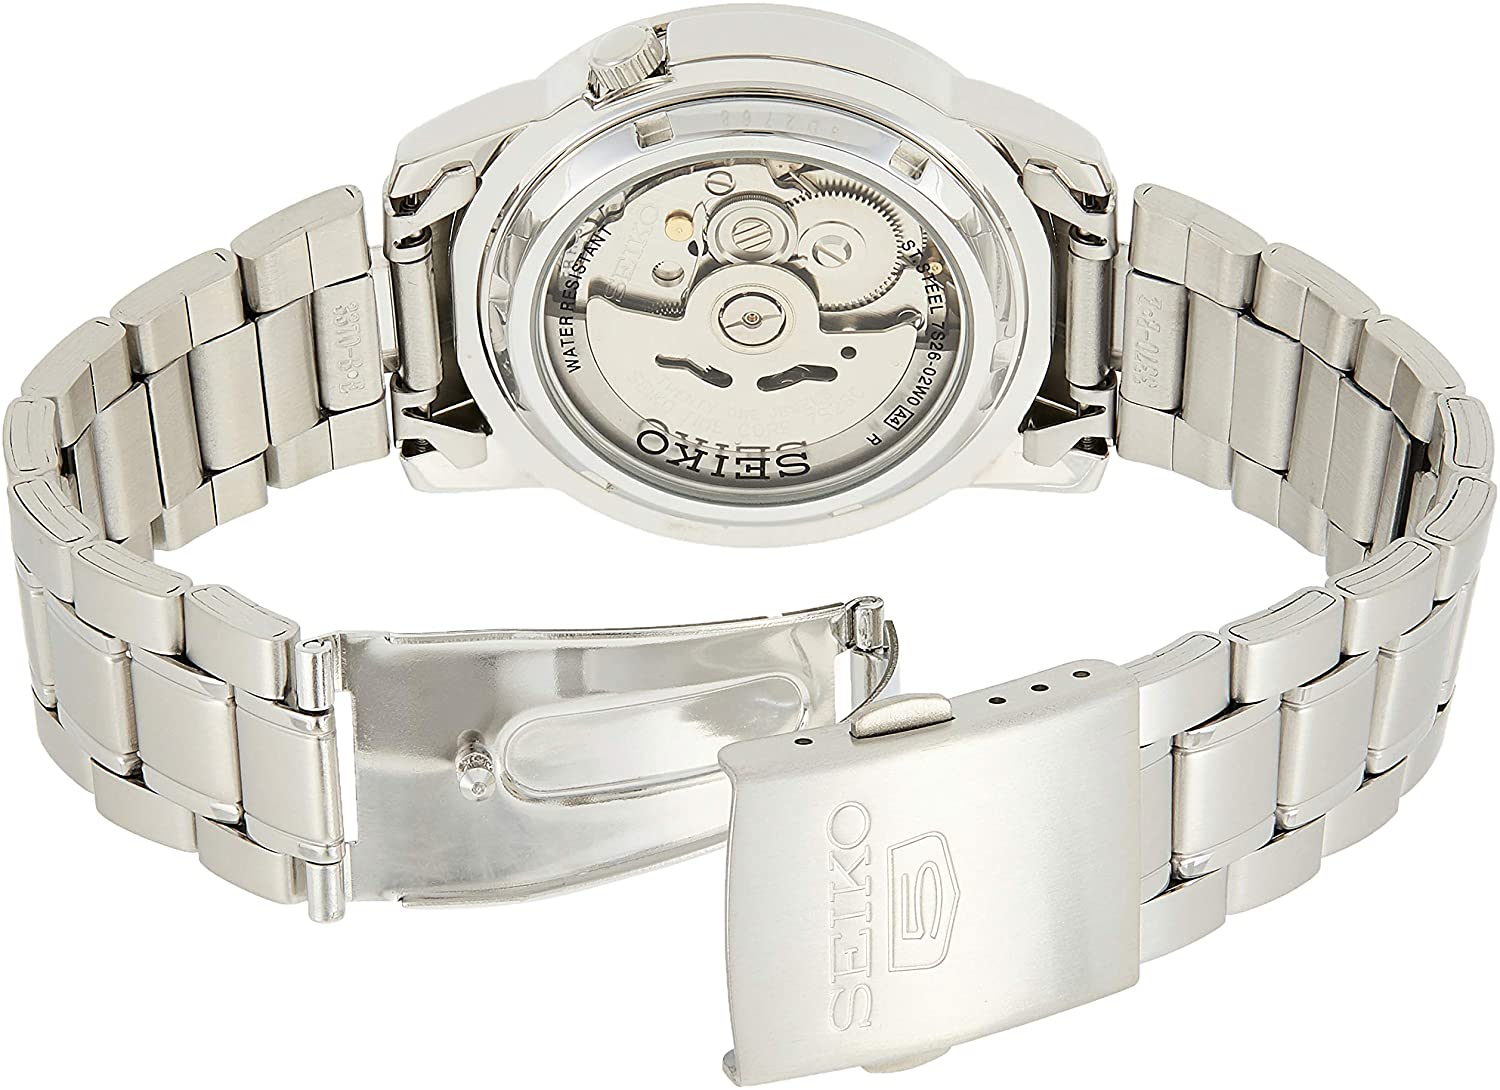 Seiko Men's SNKK31 Automatic Watch